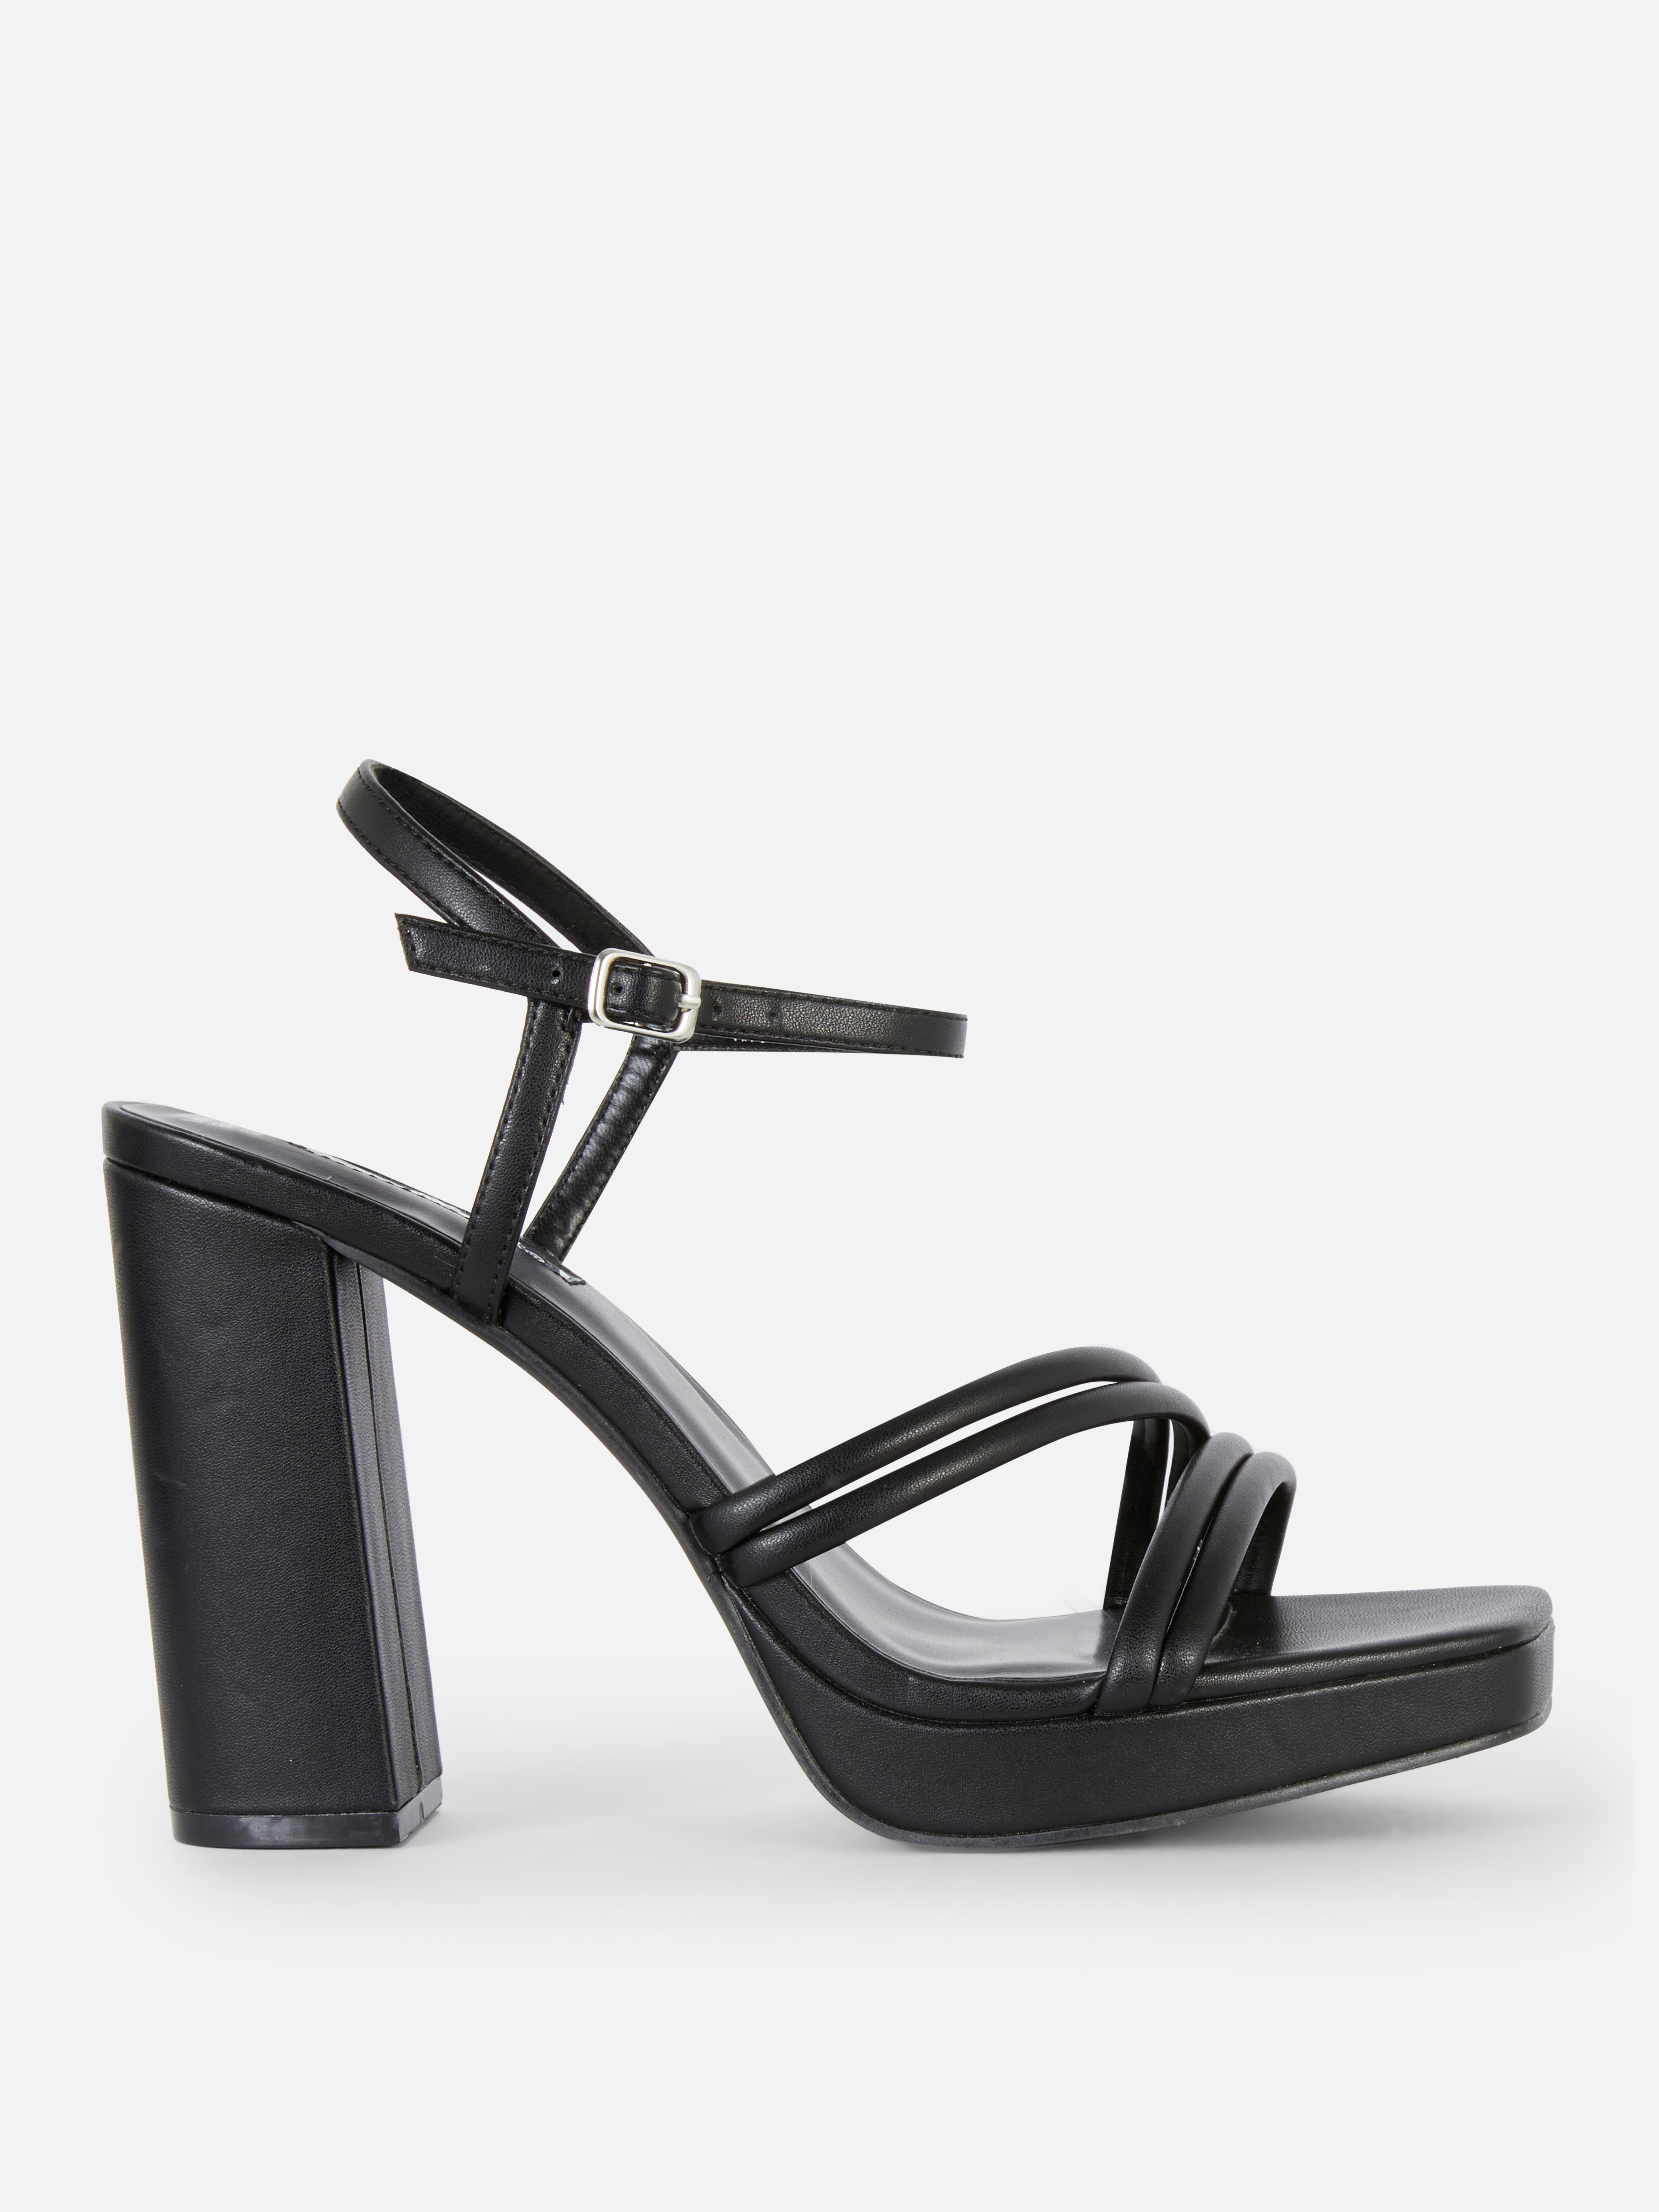 White/Black 38                  EU discount 73% Primark sandals WOMEN FASHION Footwear Sandals Casual 